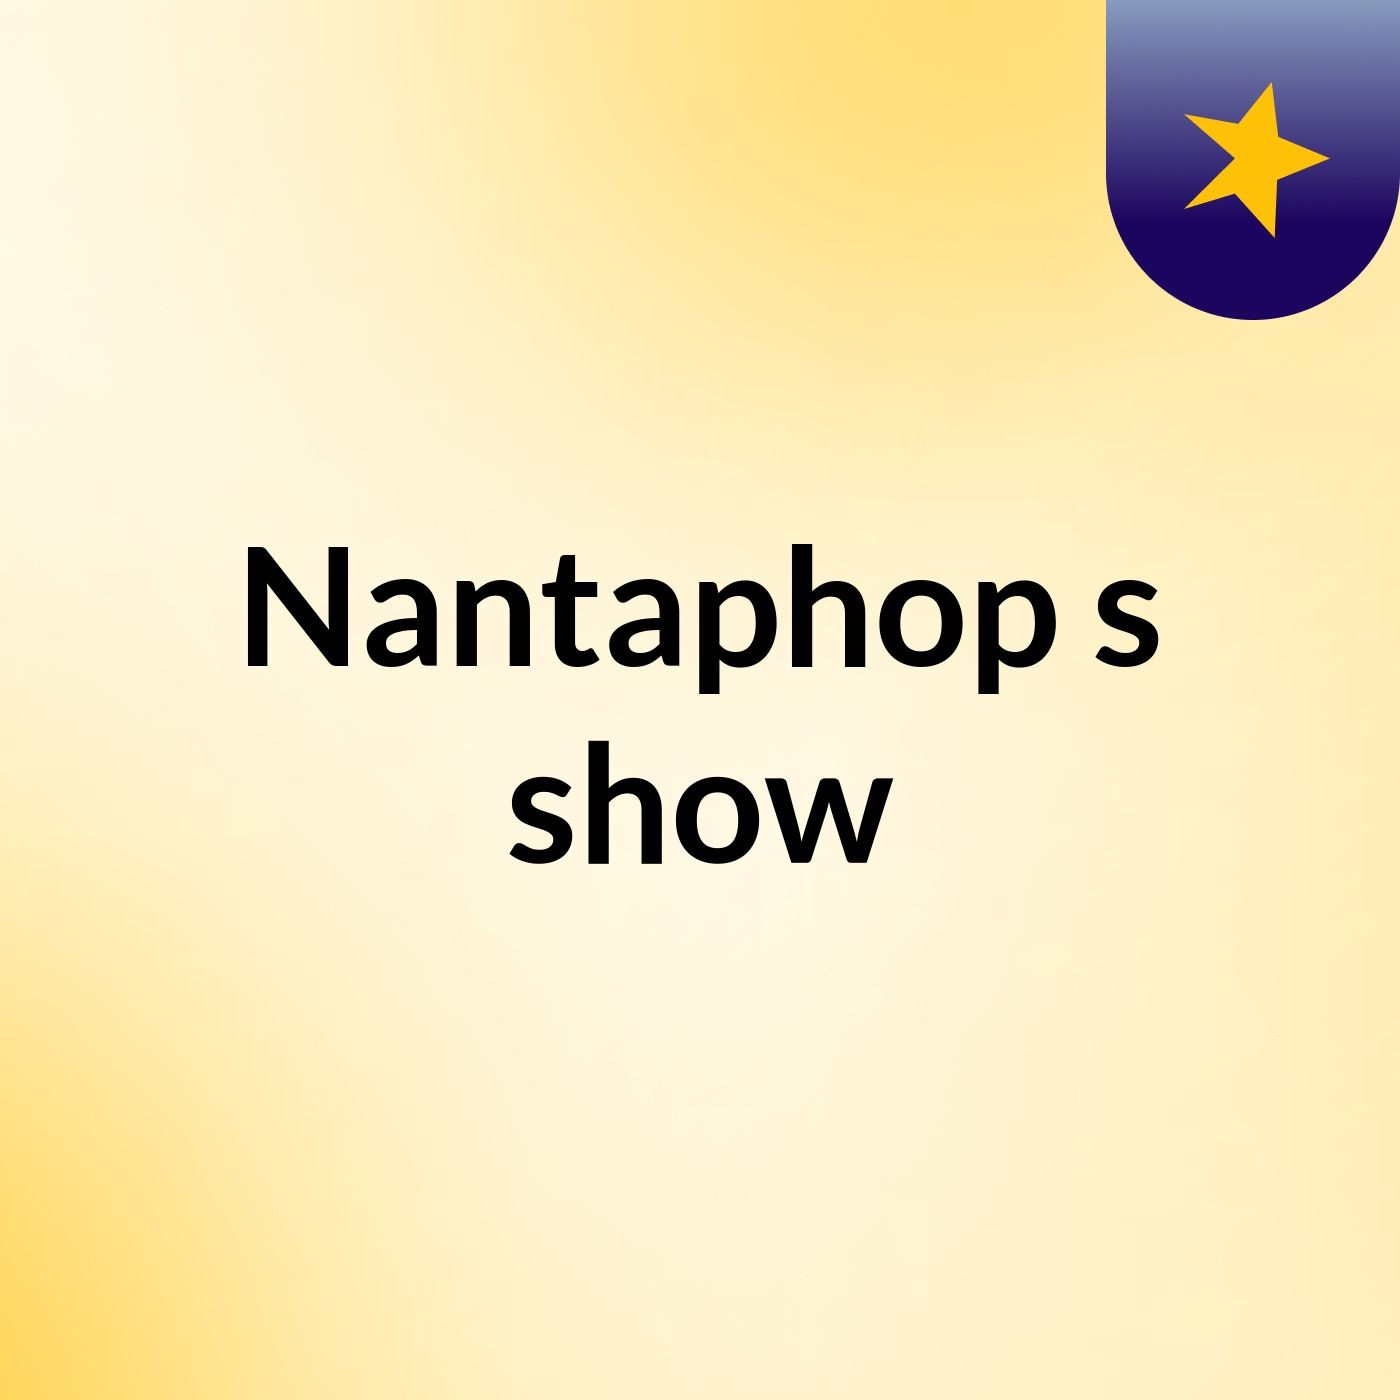 Nantaphop's show